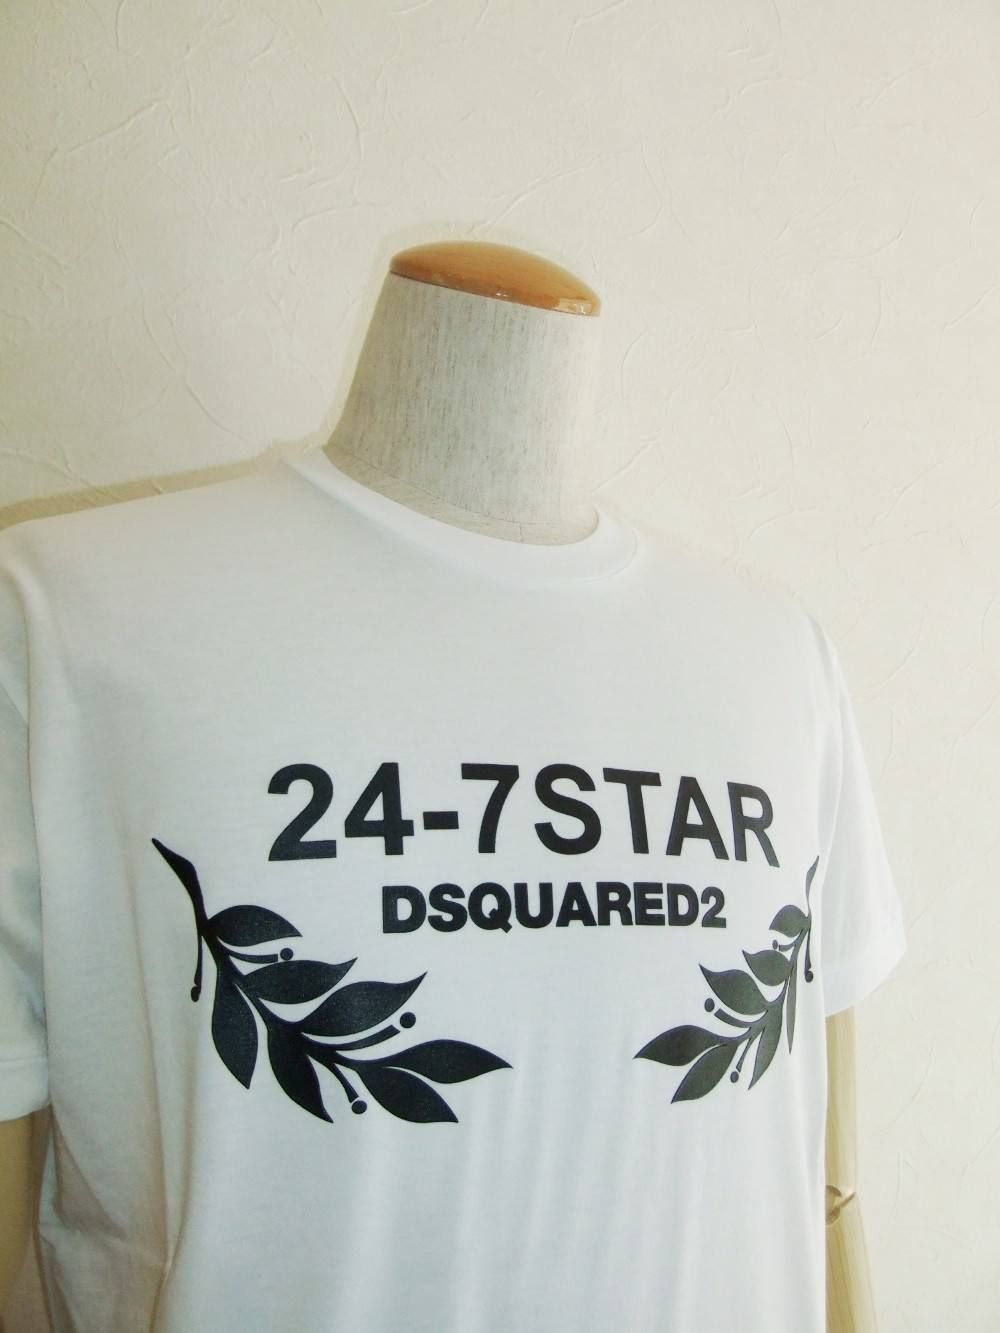 Dsquared2 - DSQUARED2 (ディースクエアード) 24-7 STAR Tシャツ